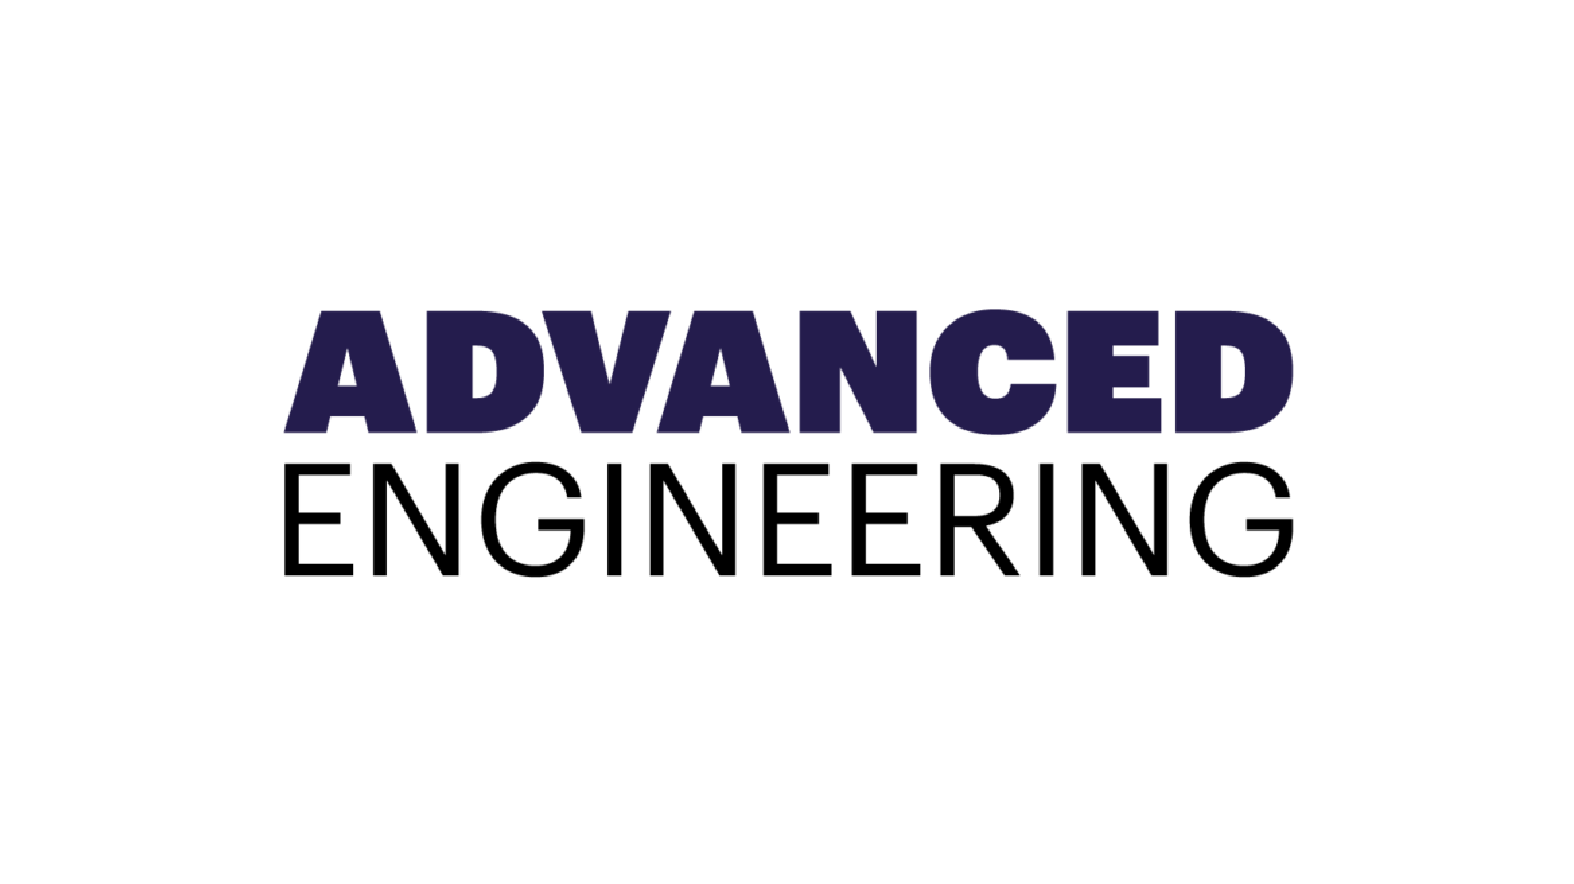 Logo Advanced Engineering